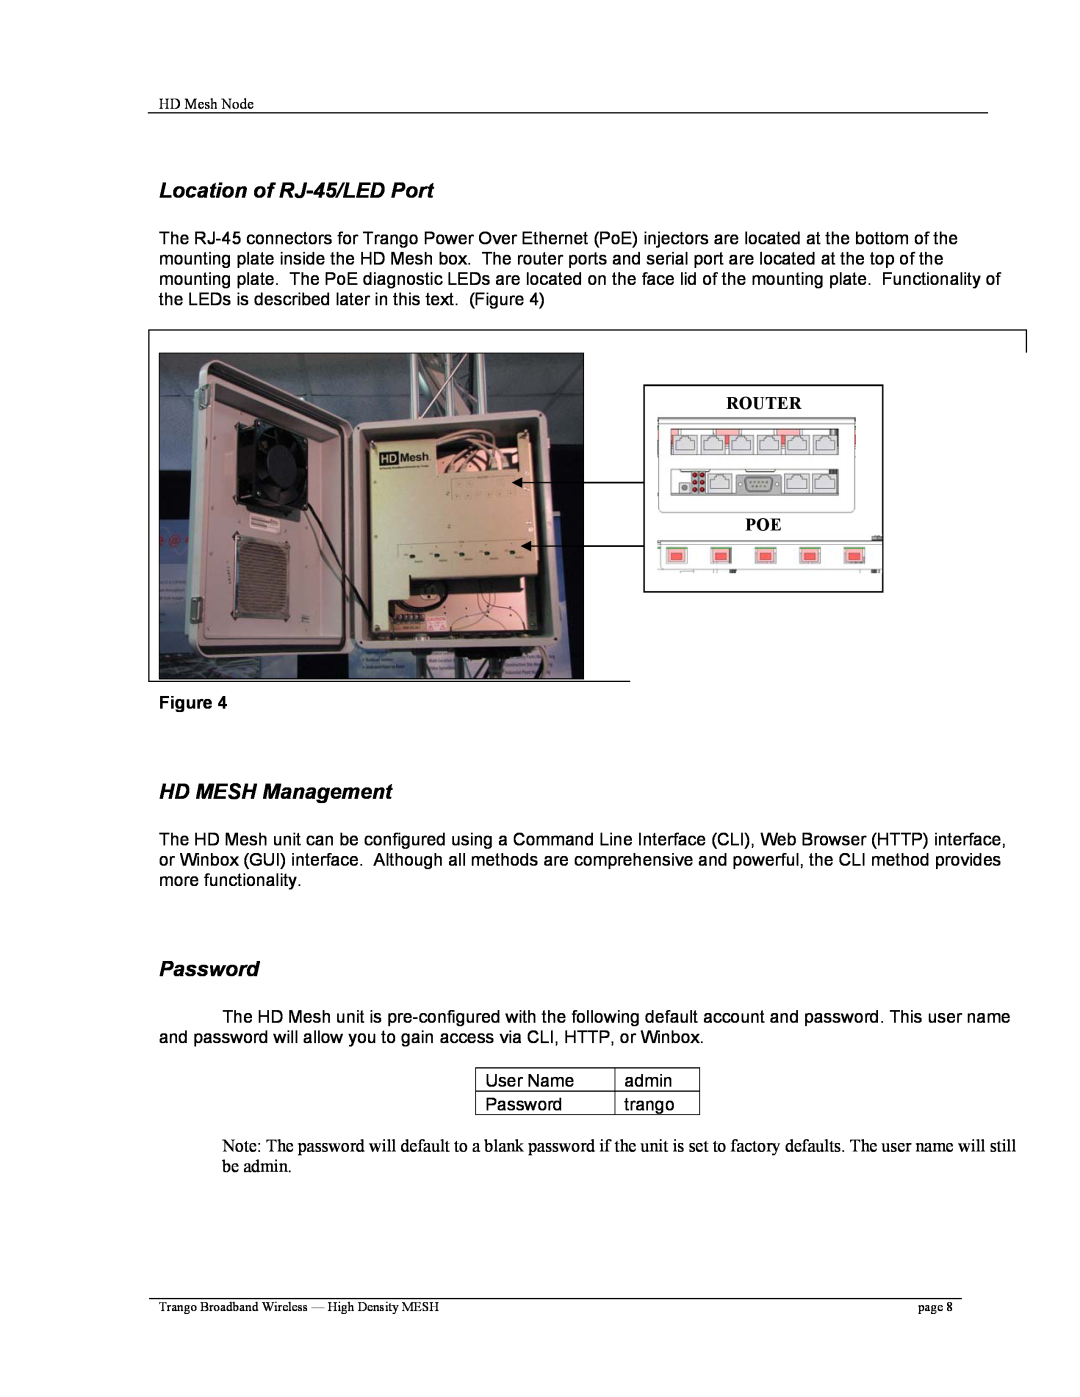 Trango Broadband High Density Mesh System user manual Location of RJ-45/LED Port, HD MESH Management, Password, Router Poe 